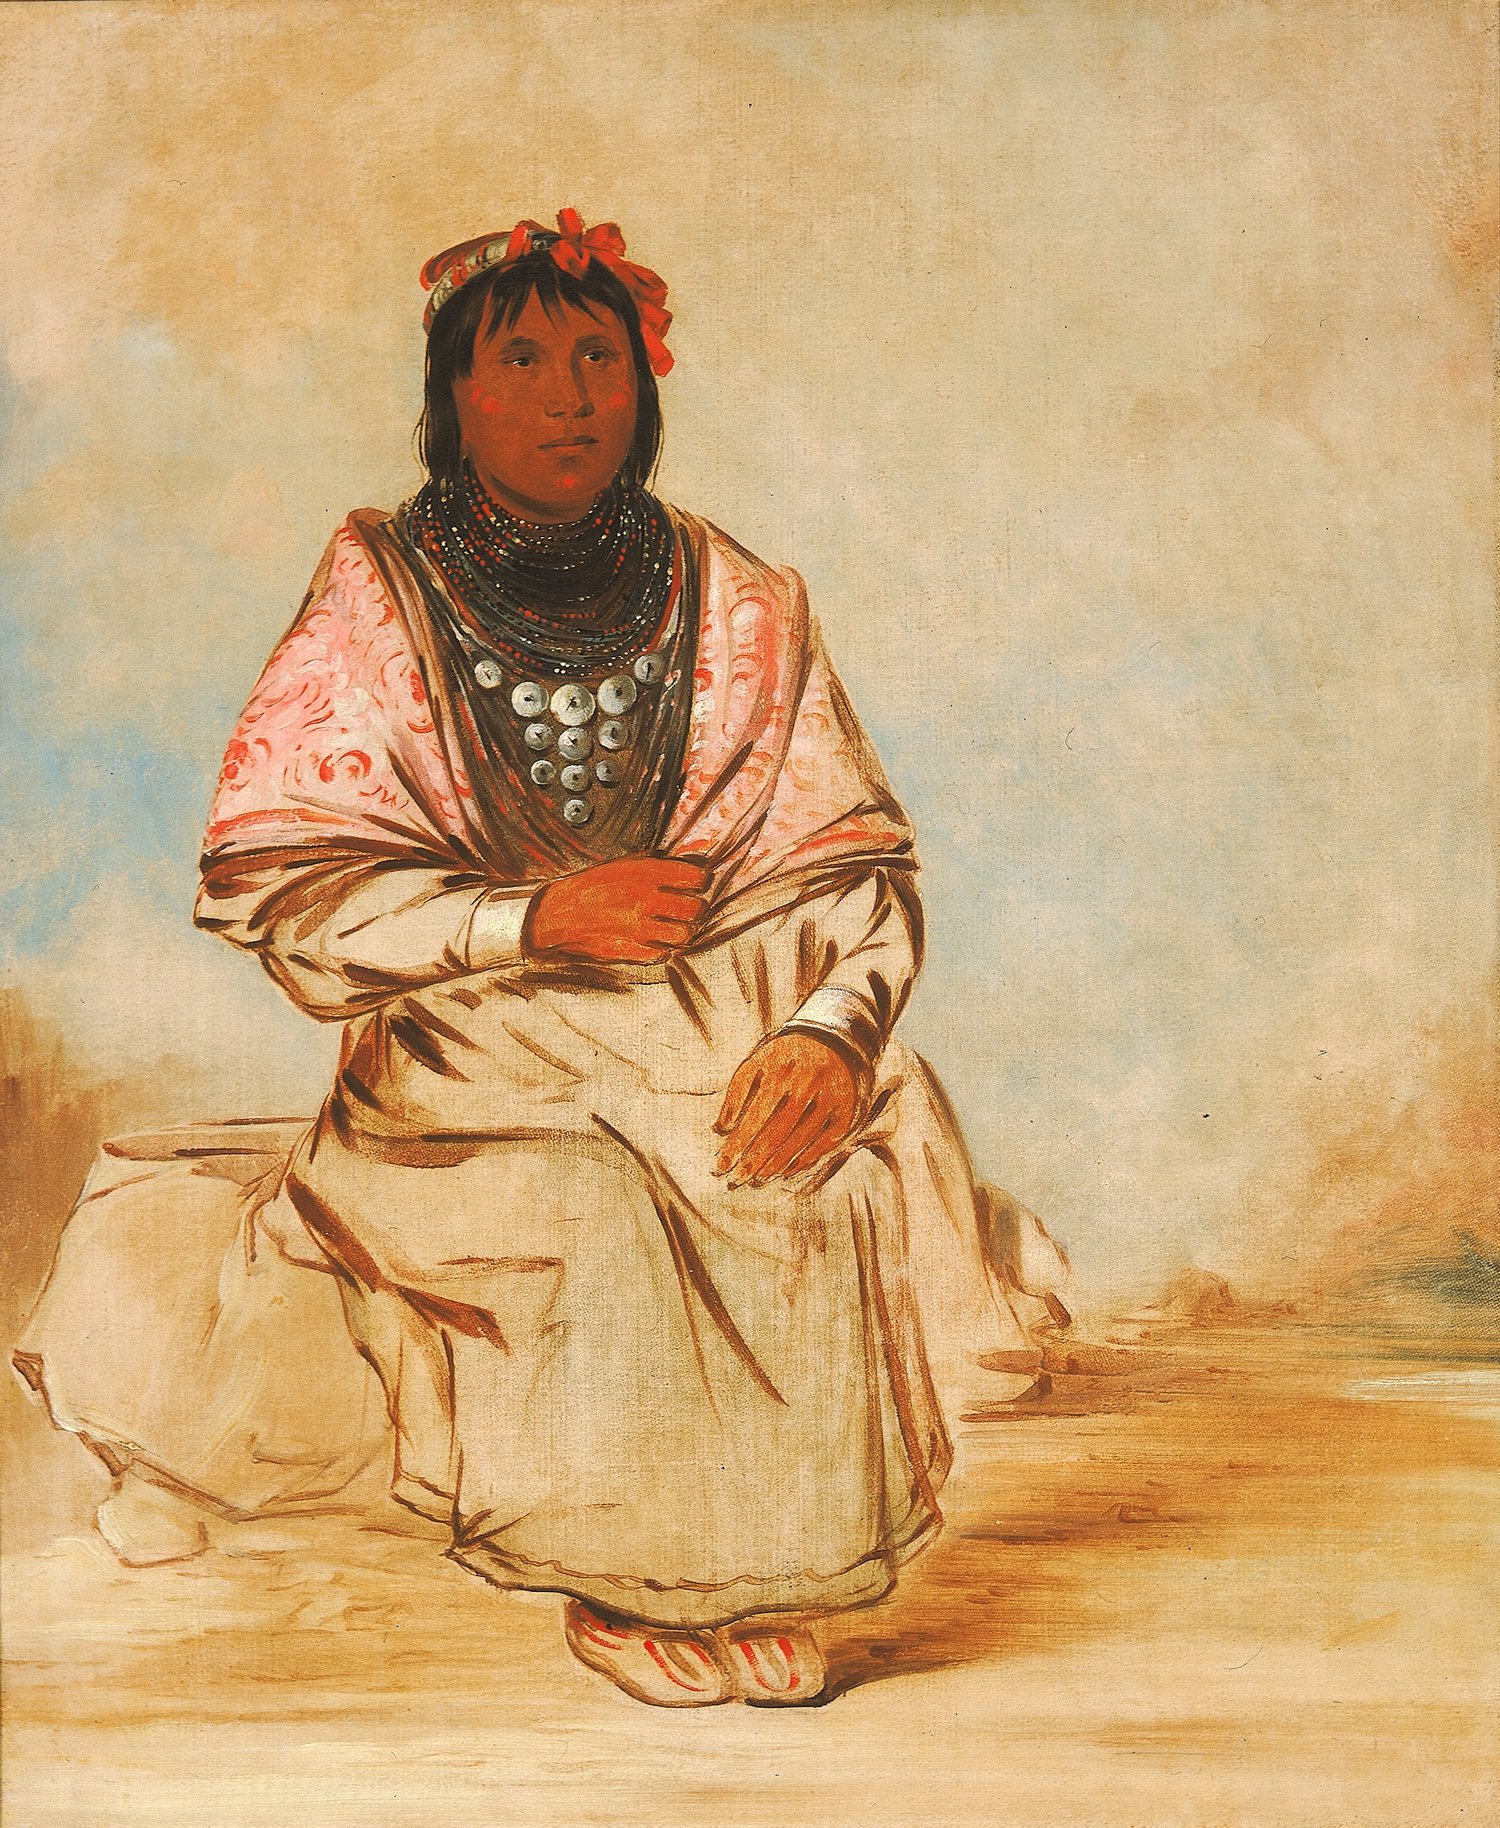 A Seminole Woman (1838)